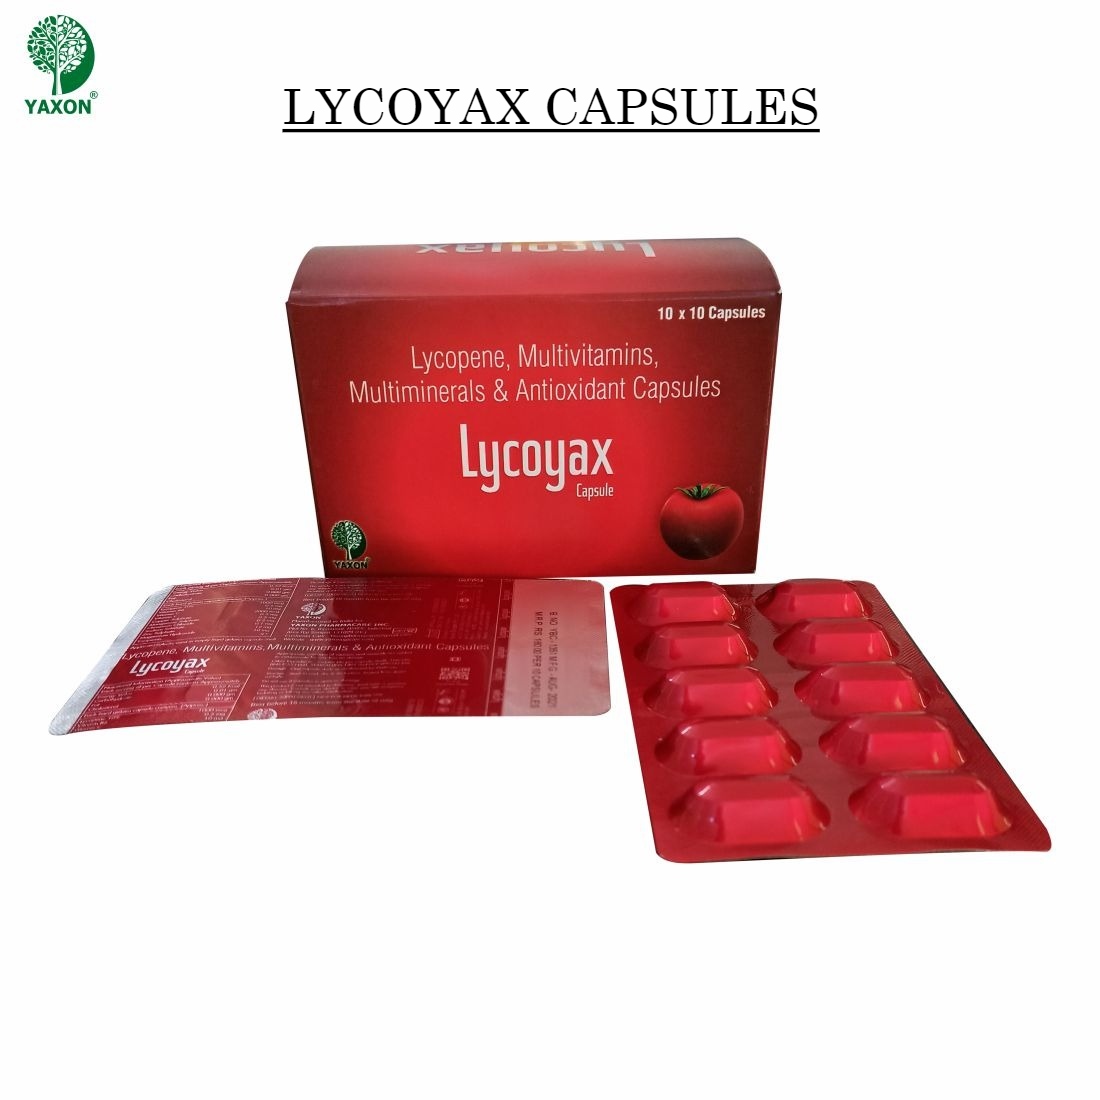 YAXON LYCOYAX Hardgel Immunity Capsules